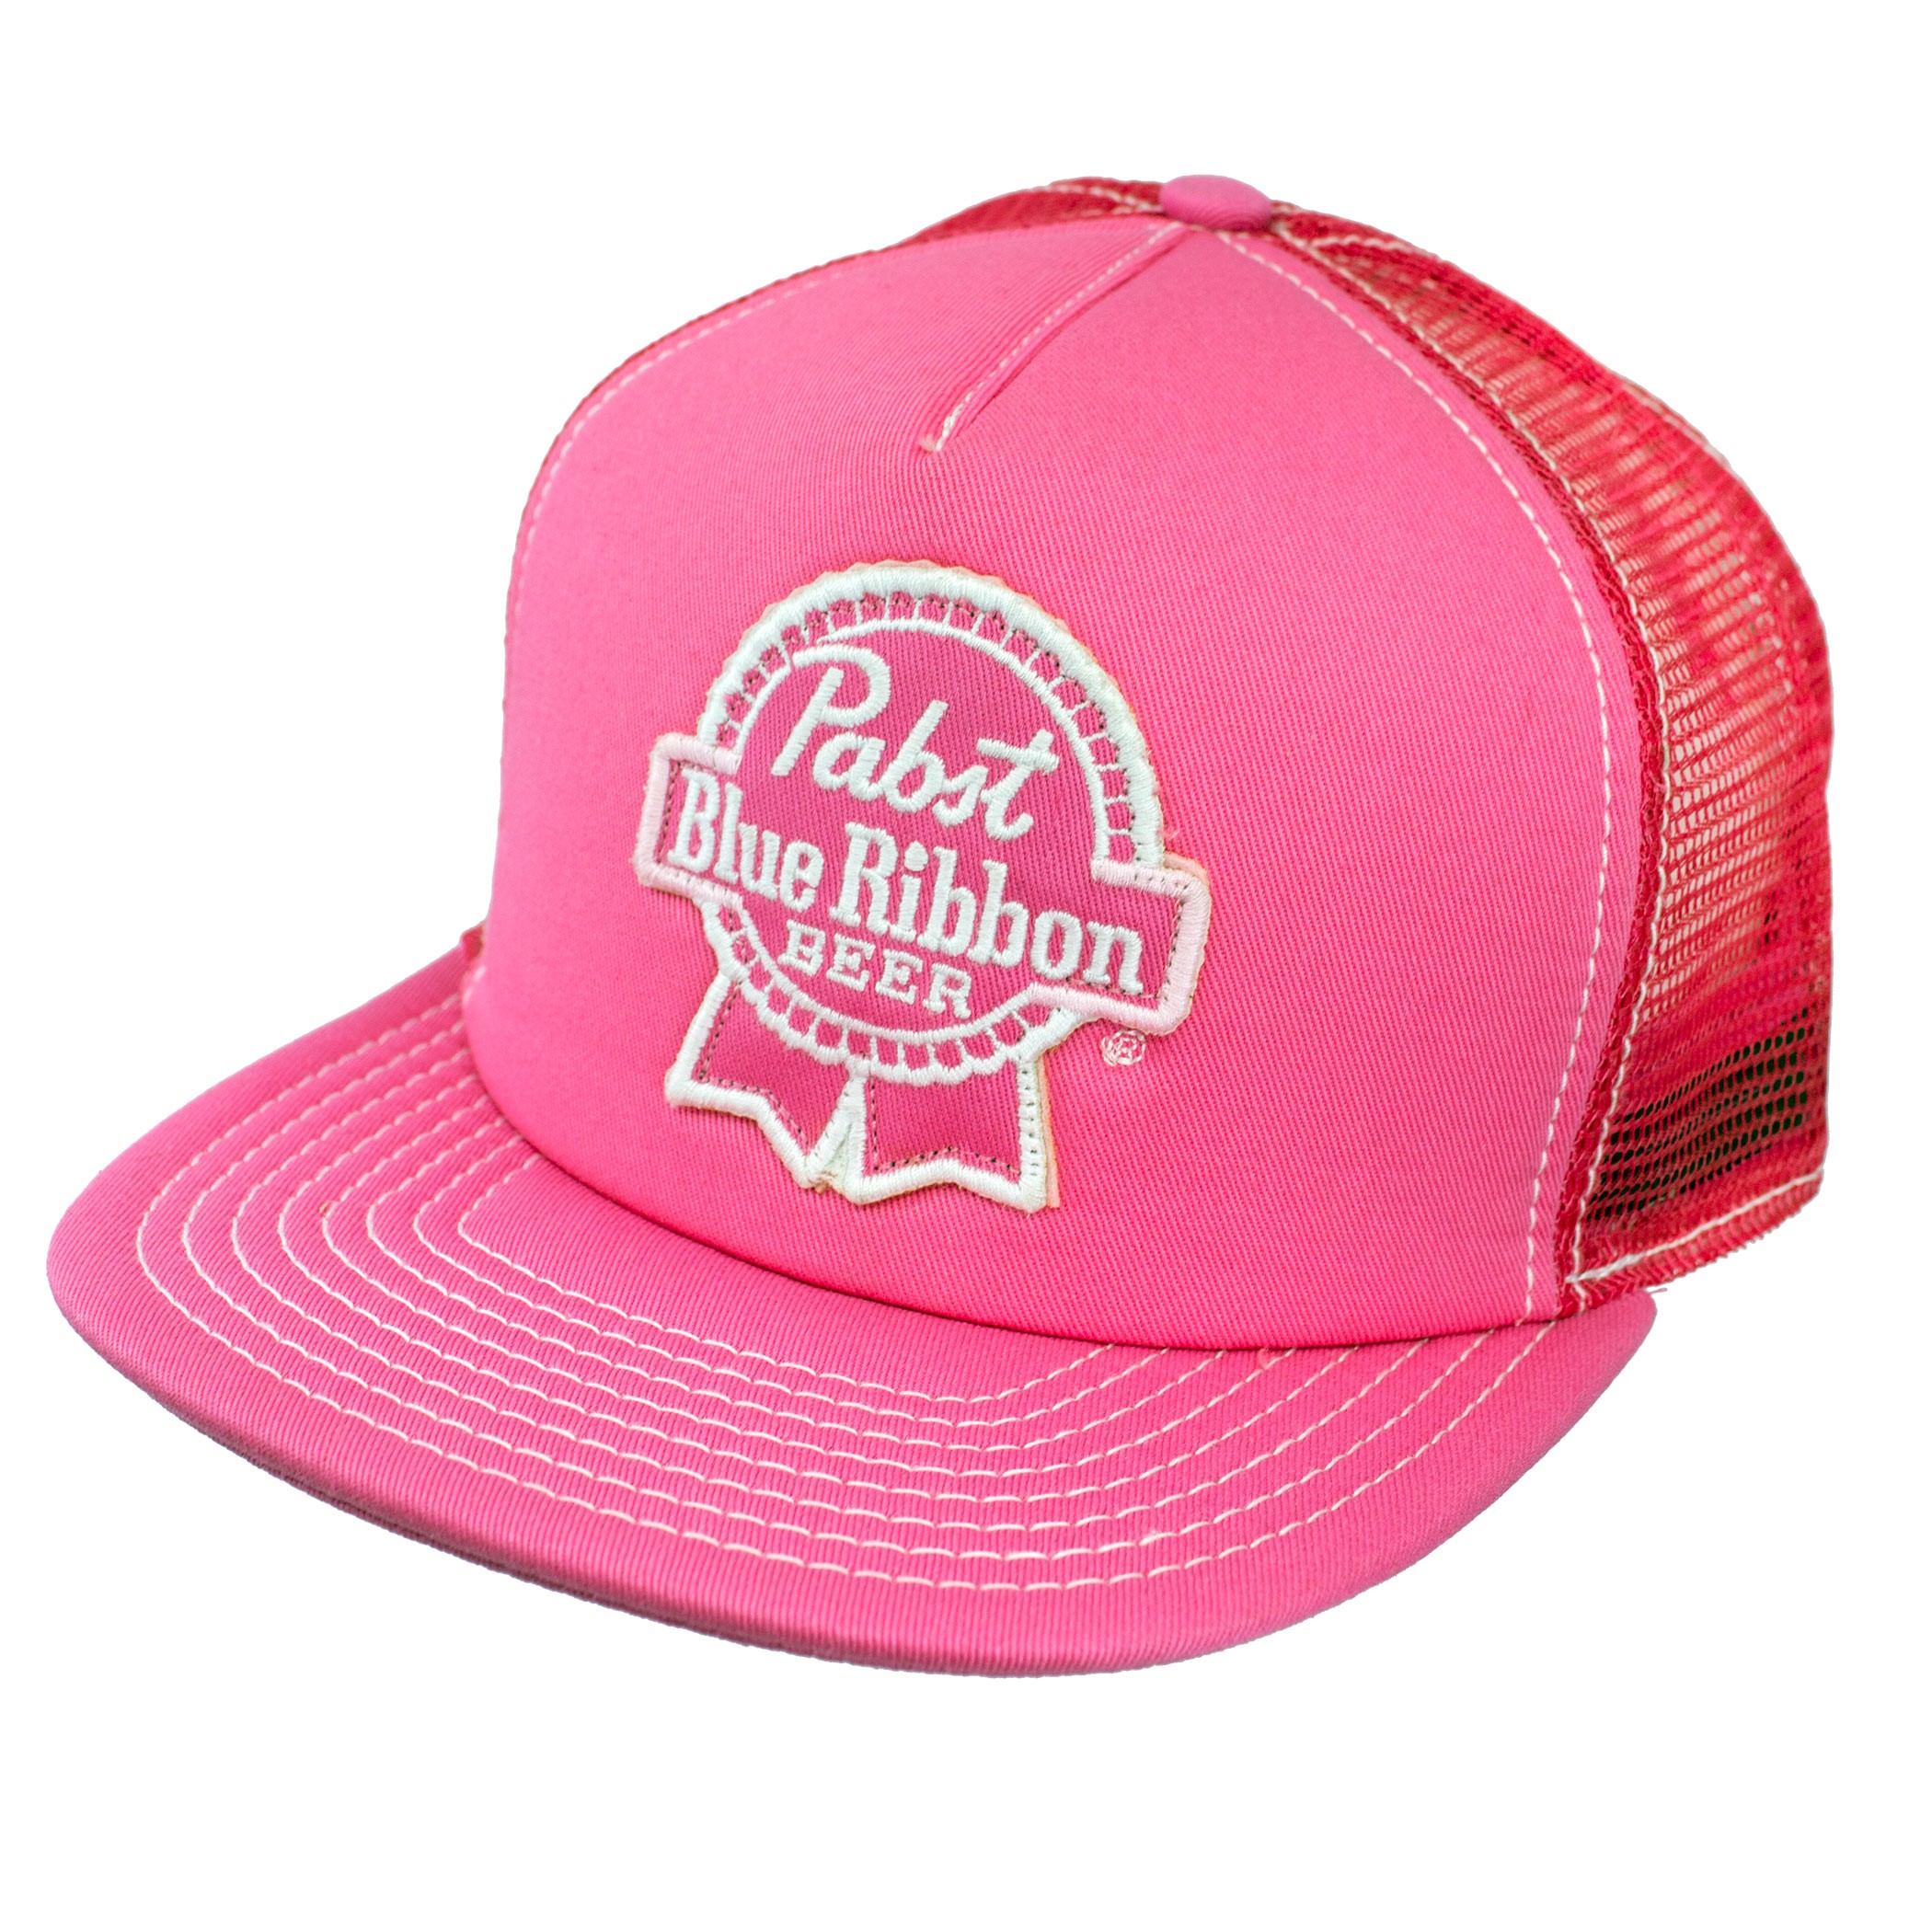 PBR Pabst Blue Ribbon Pink Trucker Hat